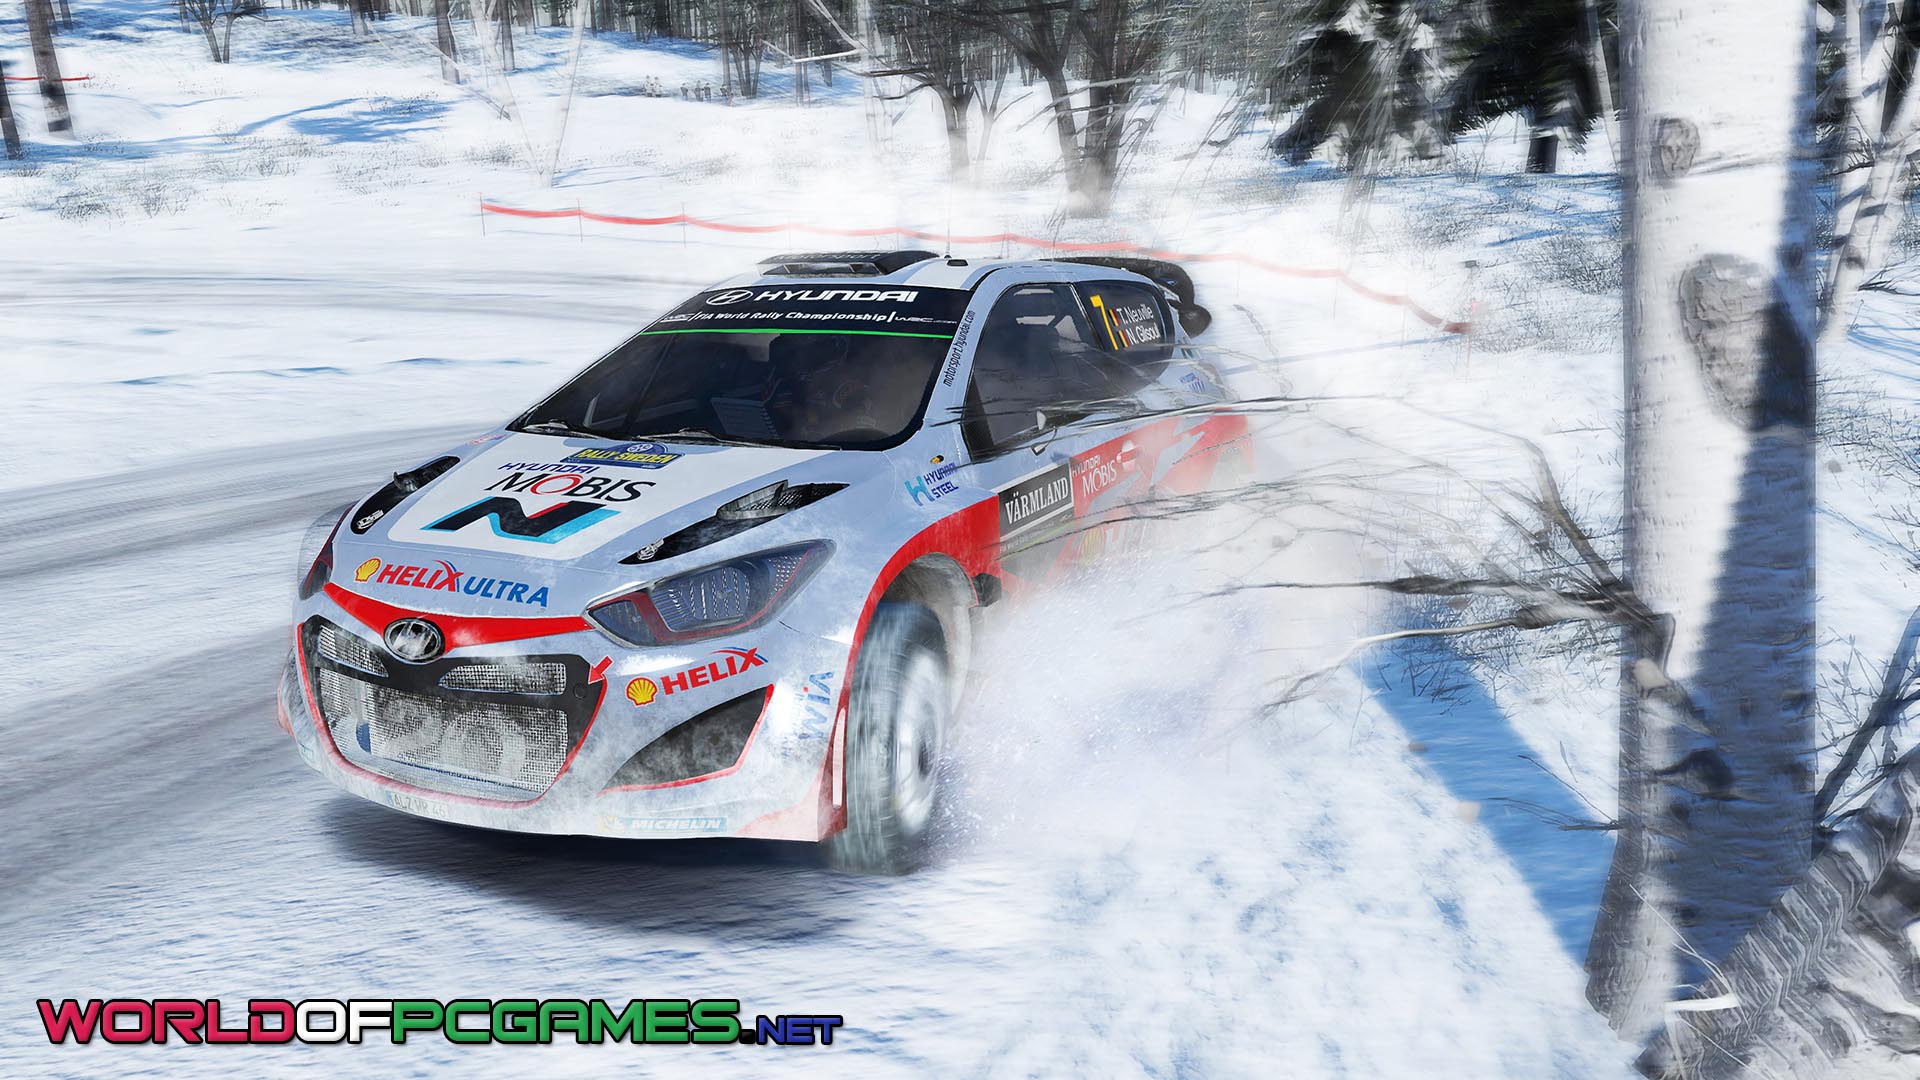 WRC 7 Free Download By worldof-pcgames.net